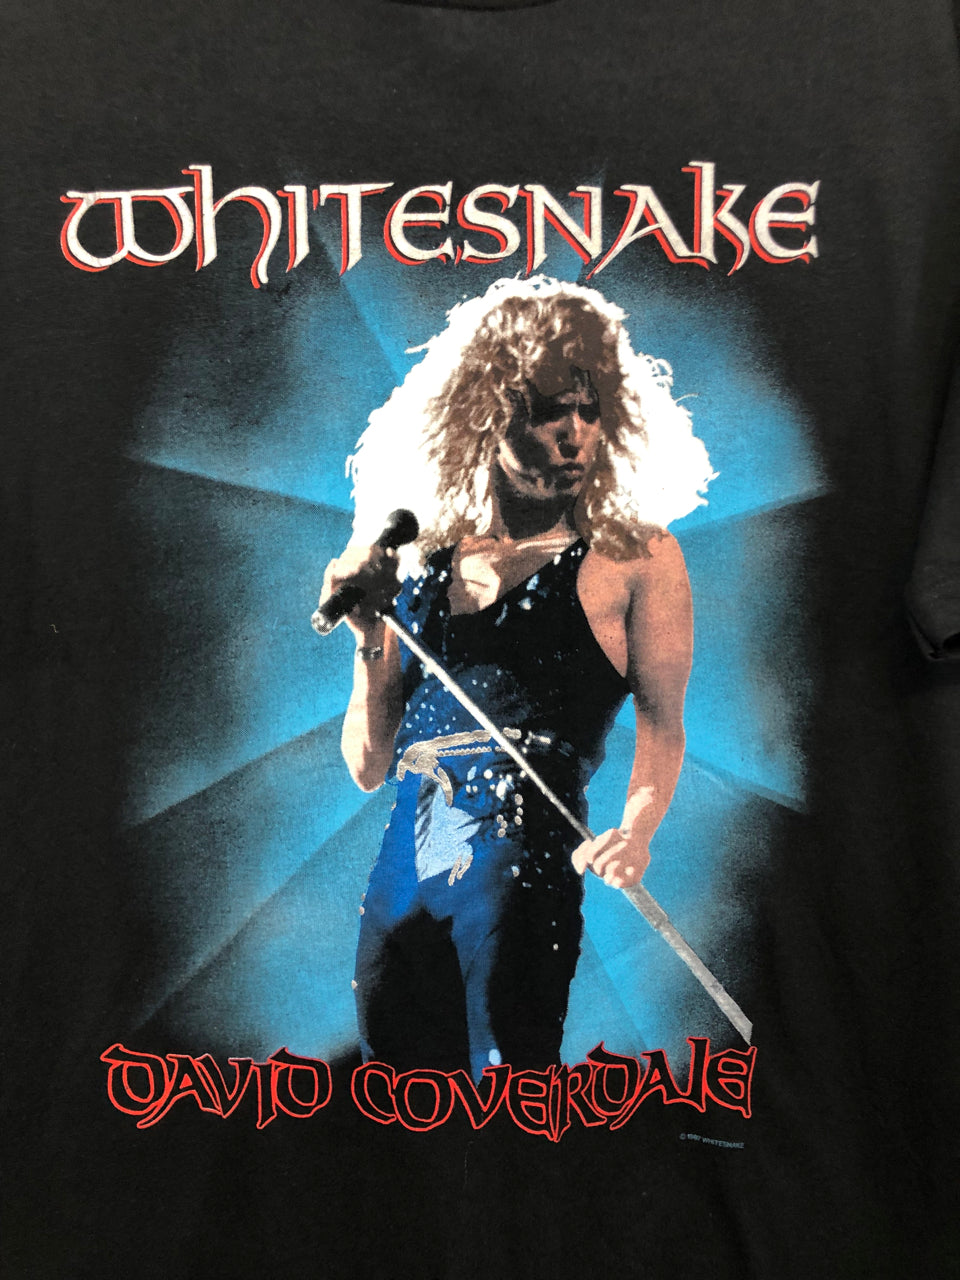 Whitesnake / David Coverdale 1988 Tour T-Shirt